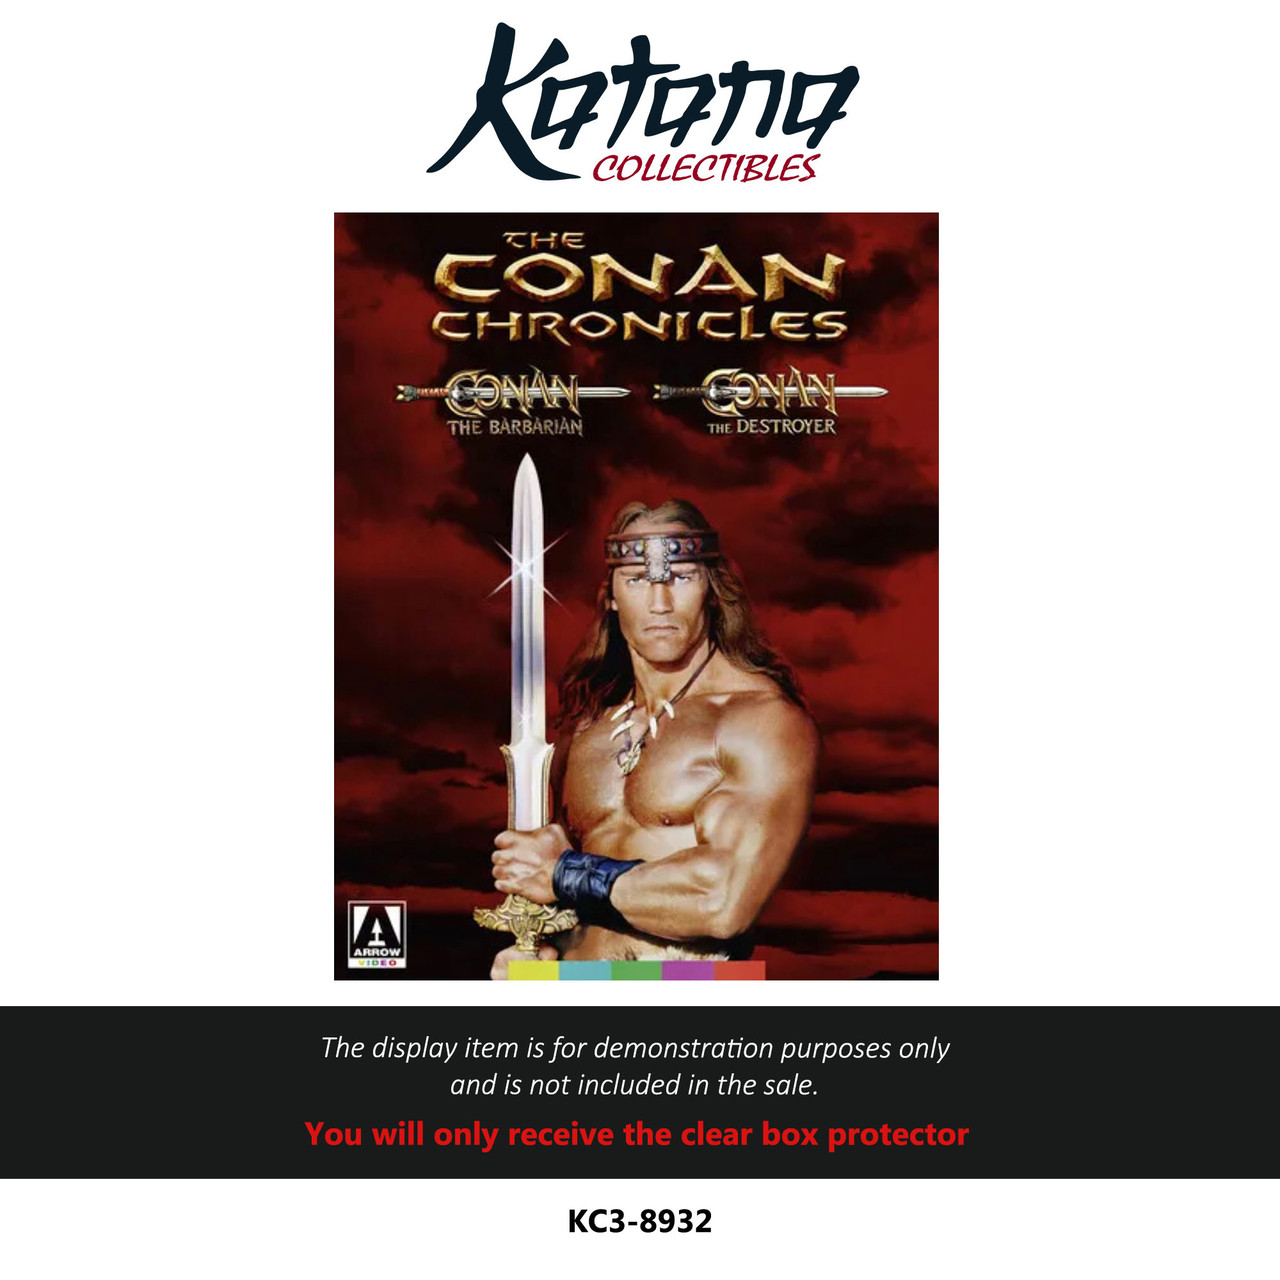 Katana Collectibles Protector For The Conan Chronicles Arrow Video Set (4K Uhd Blu Ray)